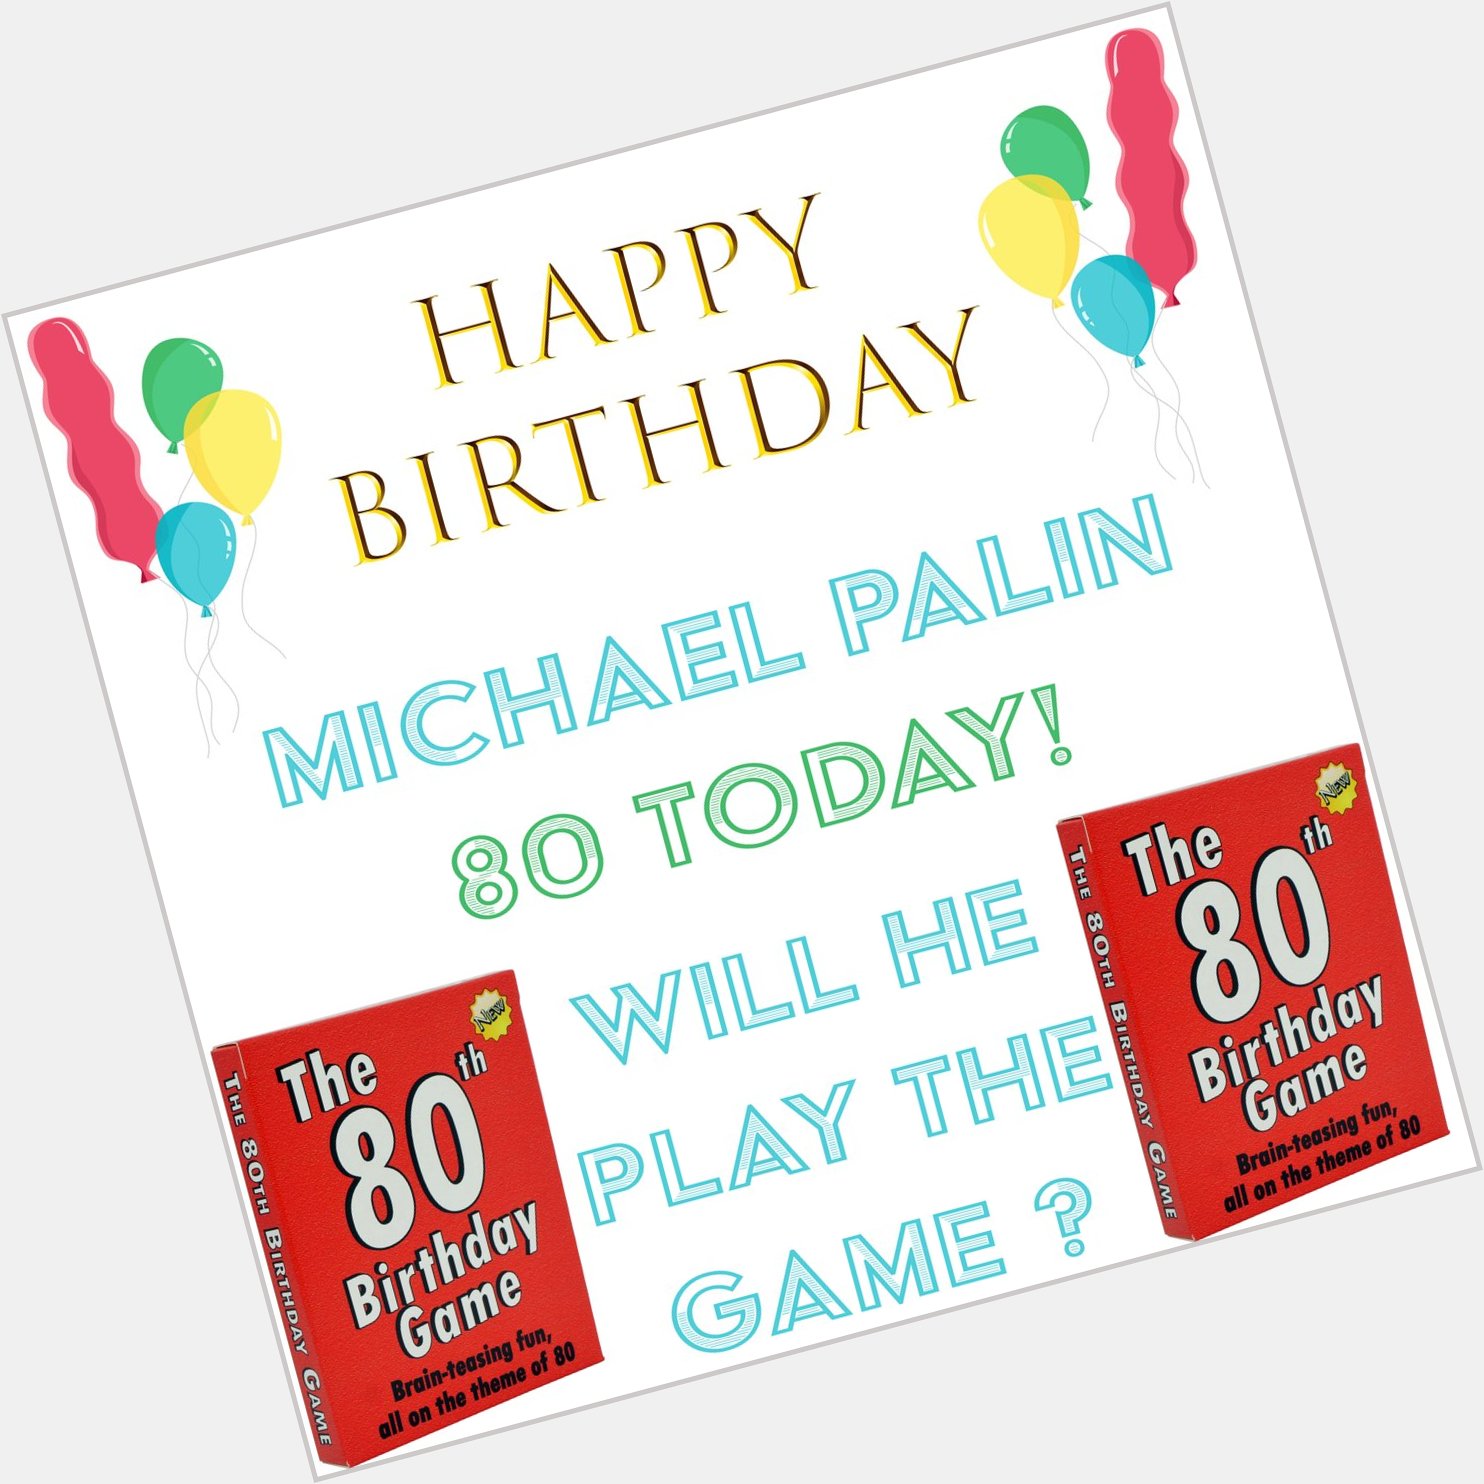 Happy birthday Michael Palin  